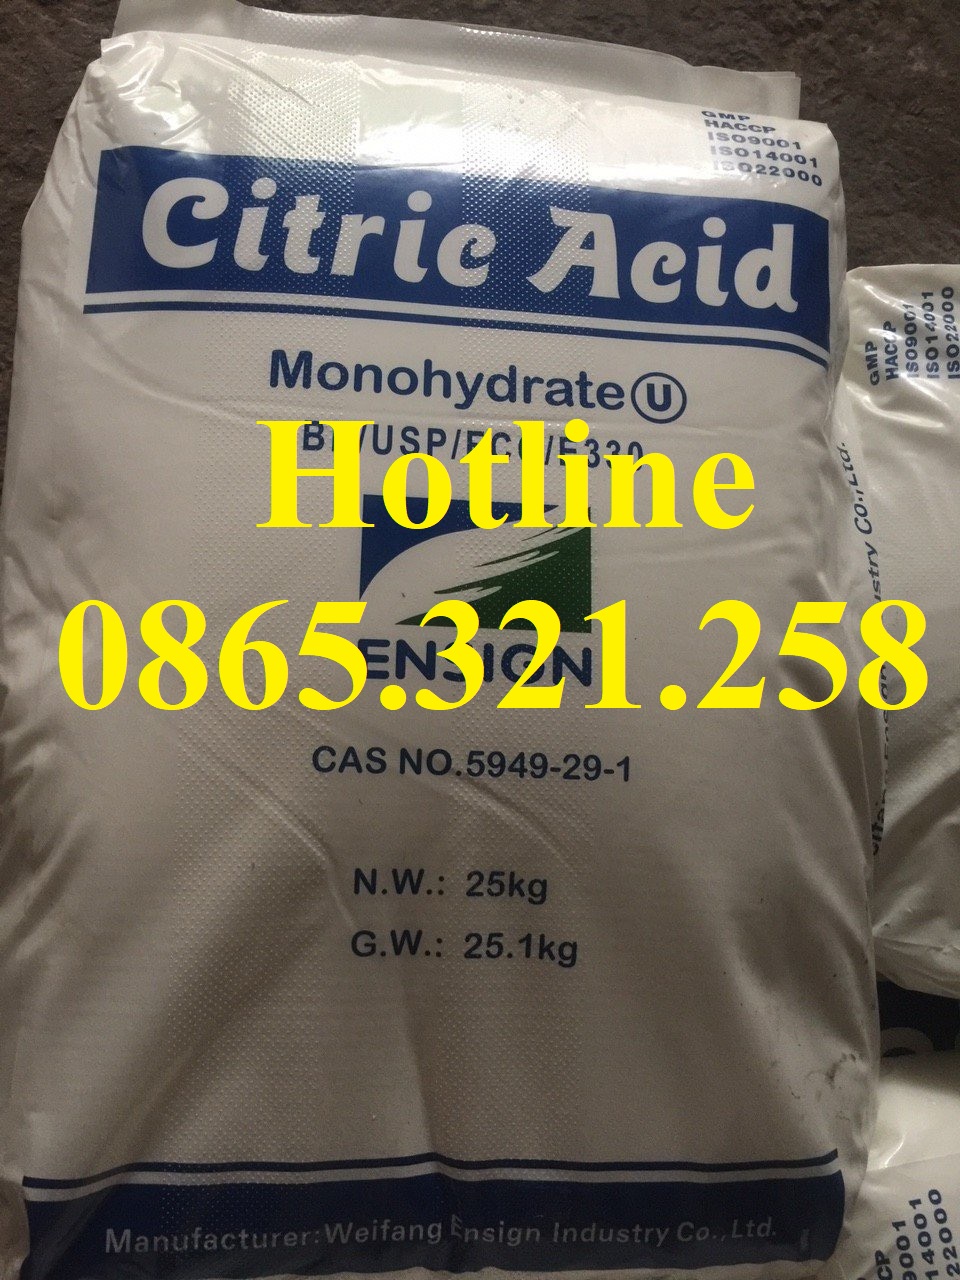 Citric acid monohydrate - C6H8O7